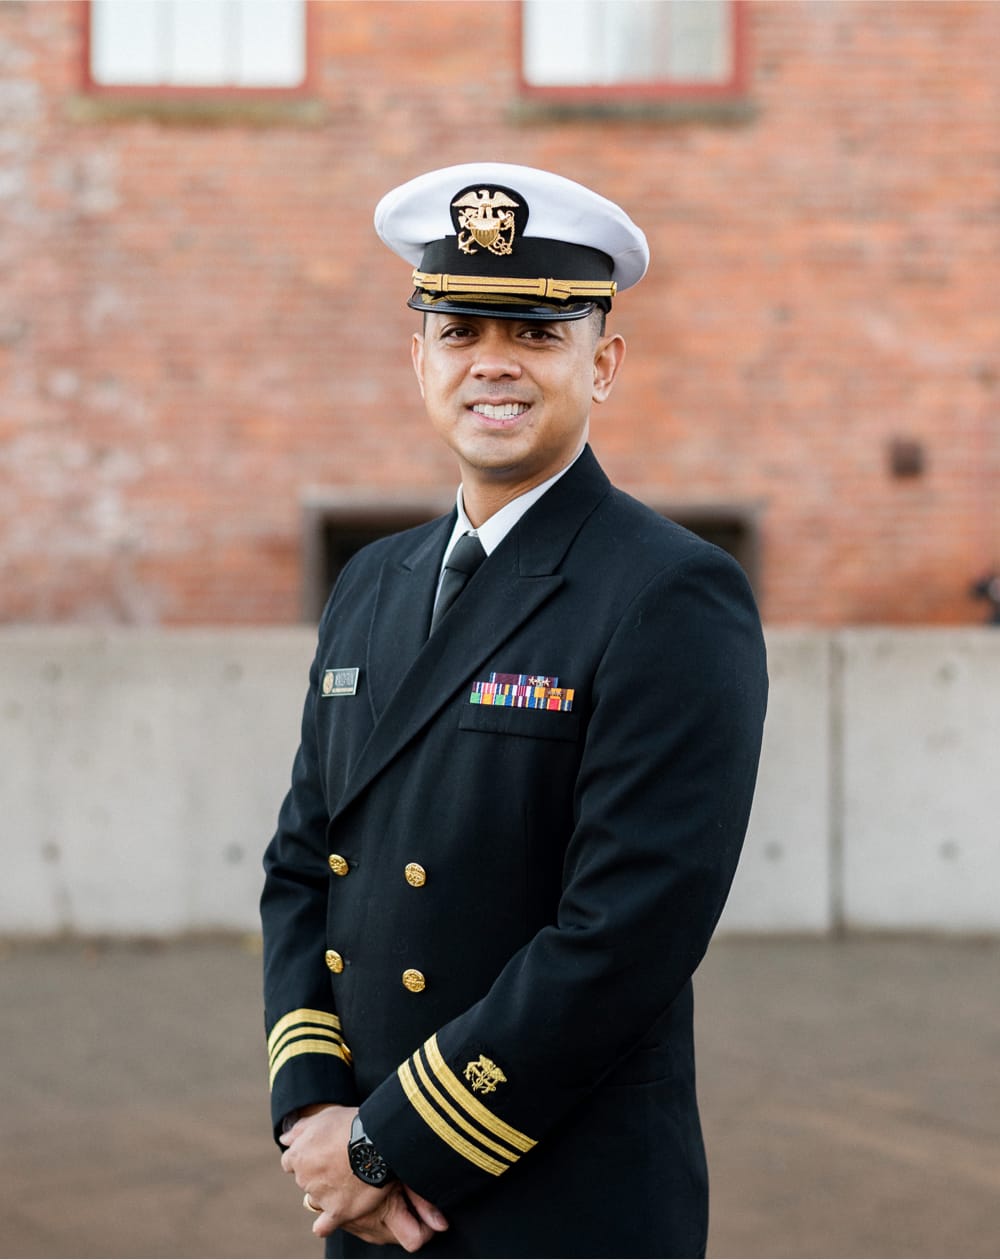 Chris Mendoza posing in uniform